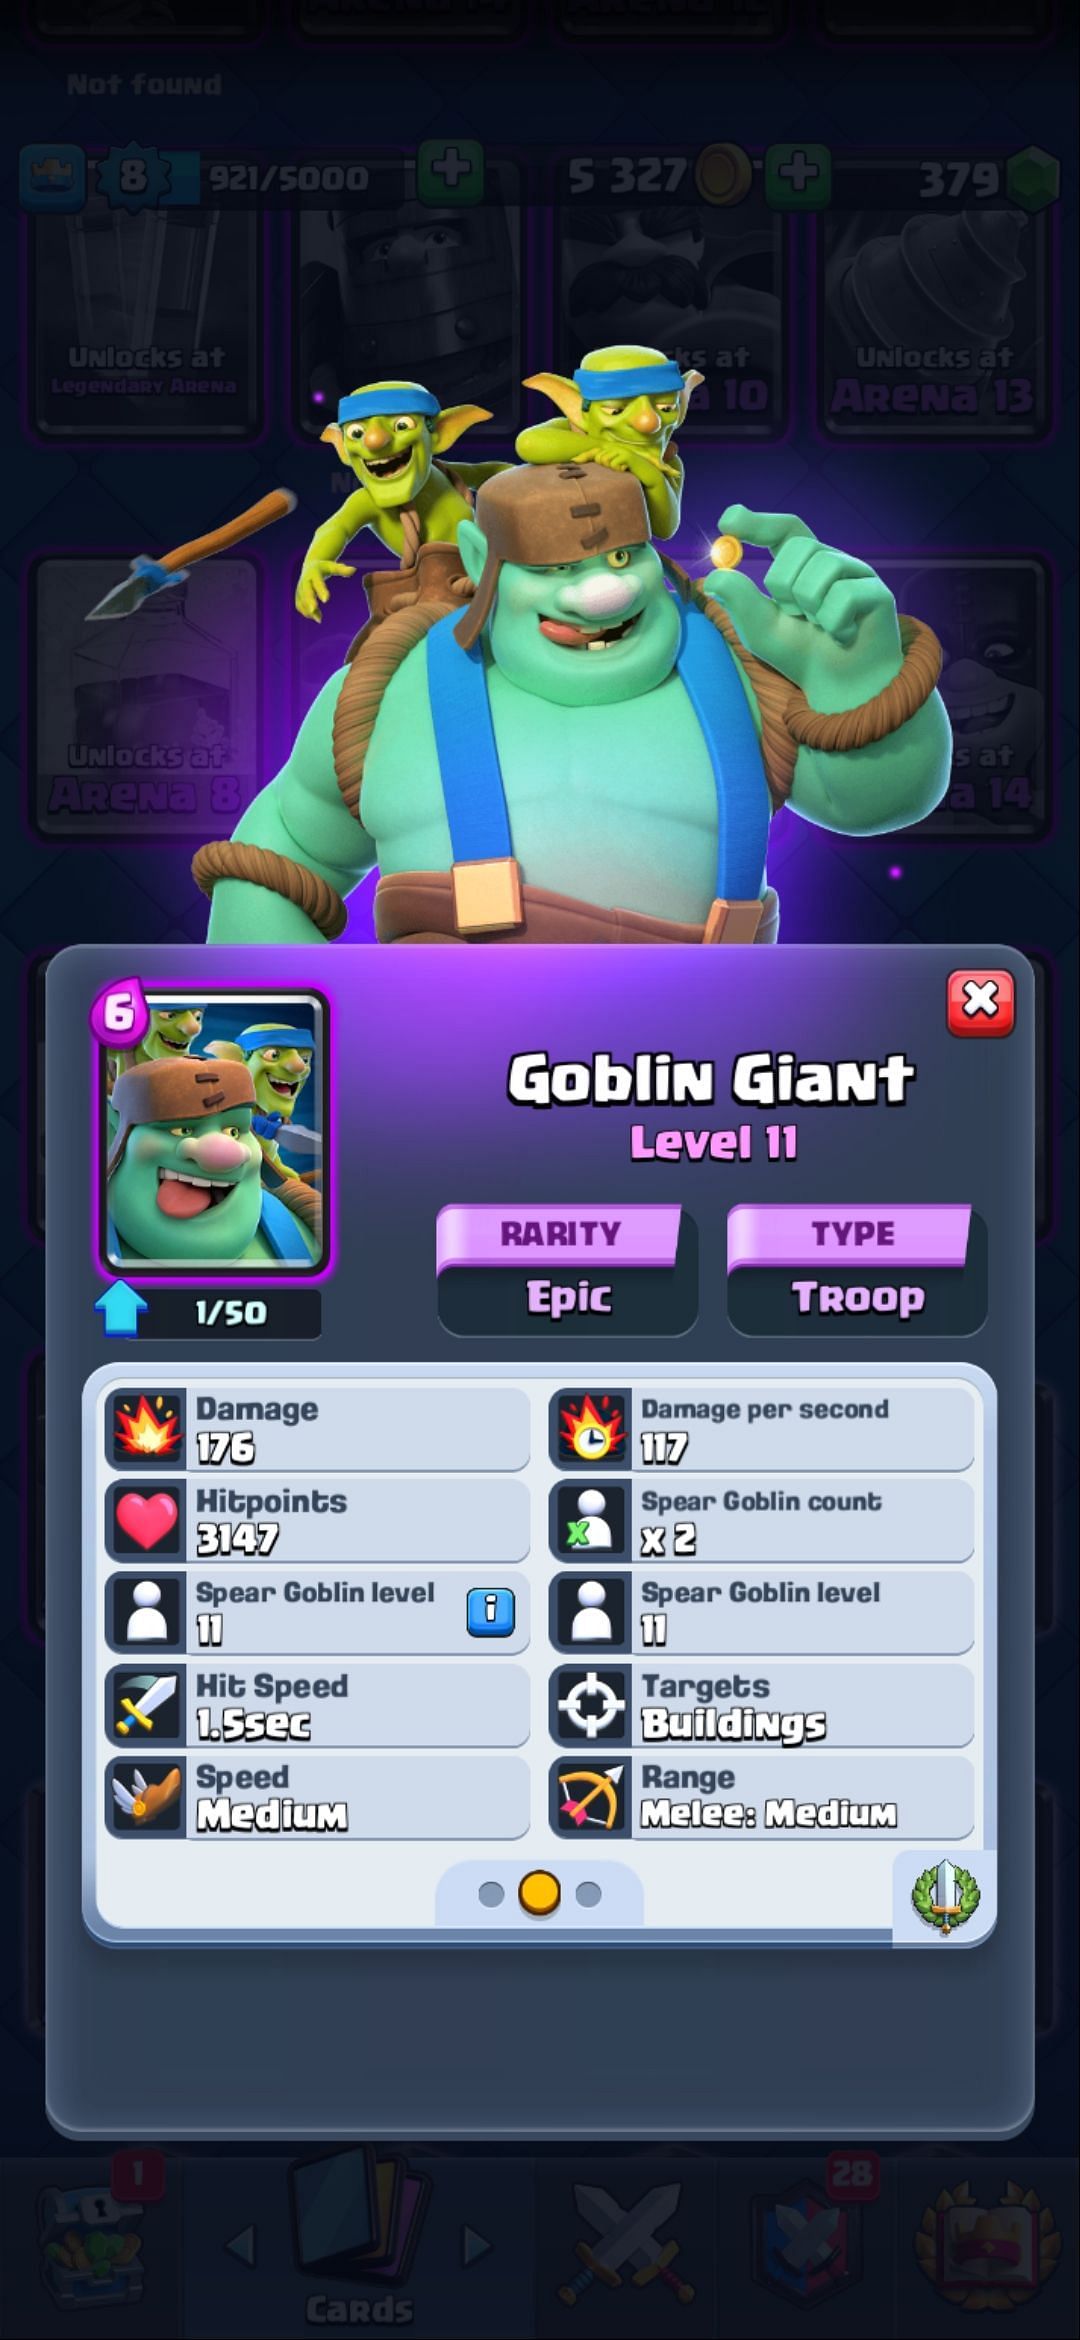 The Goblin Giant card (Image via Sportskeeda)